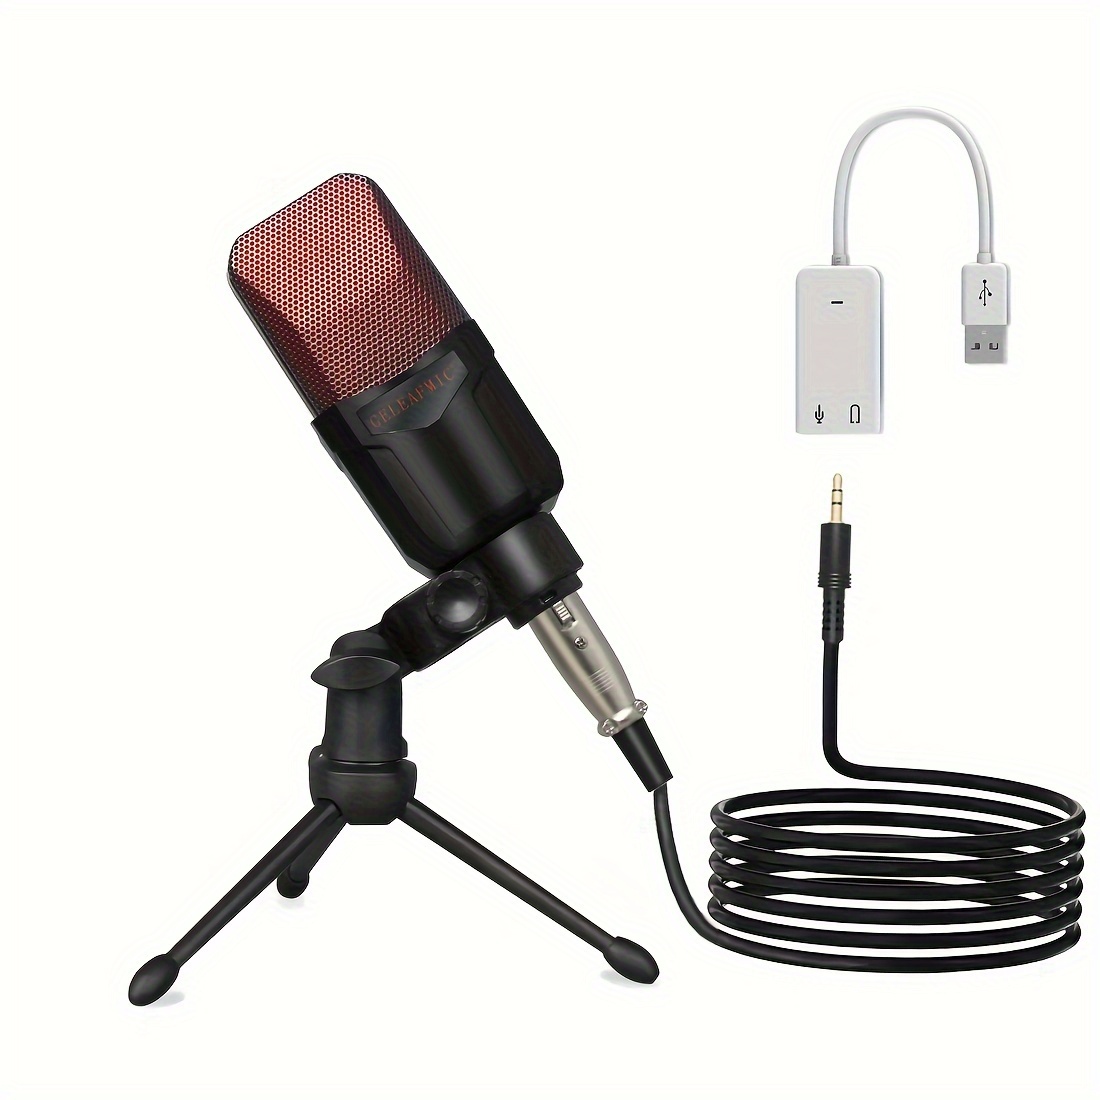 Micrófono USB, micrófono para juegos Plug and Play para PC, Mac, PS4/5,  micrófono de podcast con RGB, silencio, monitor, reducción de ruido,  aumento